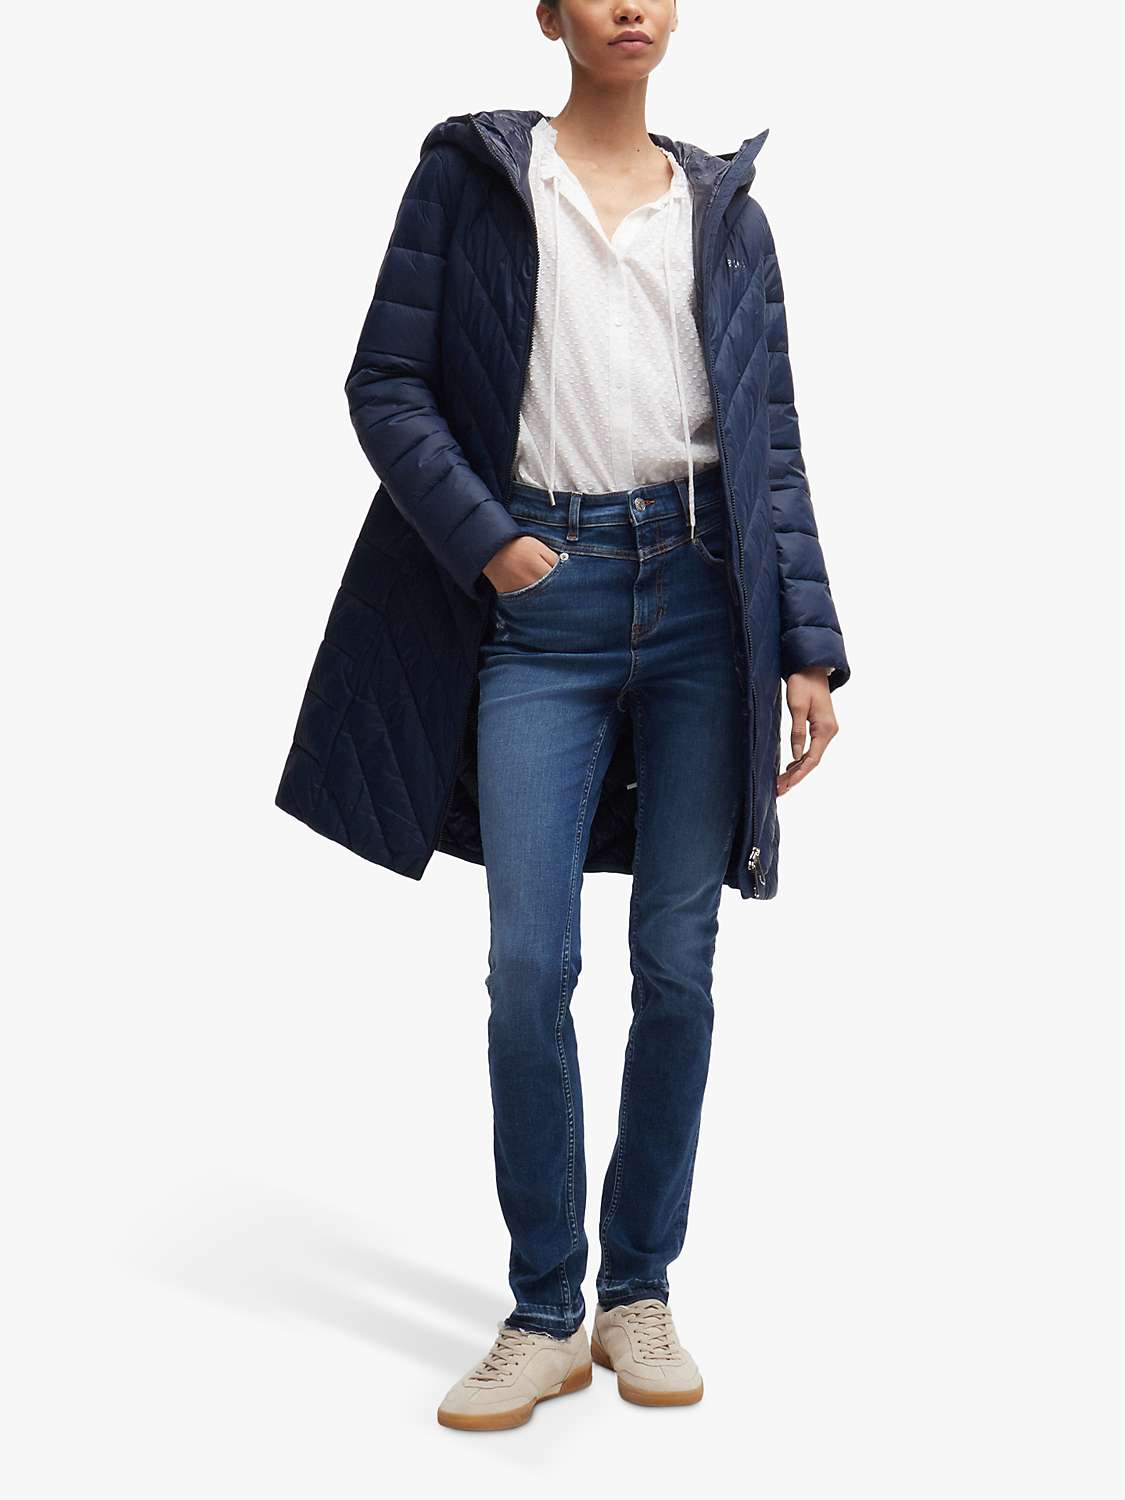 Buy BOSS Cotton Blend Skinny Jeans, Navy Online at johnlewis.com